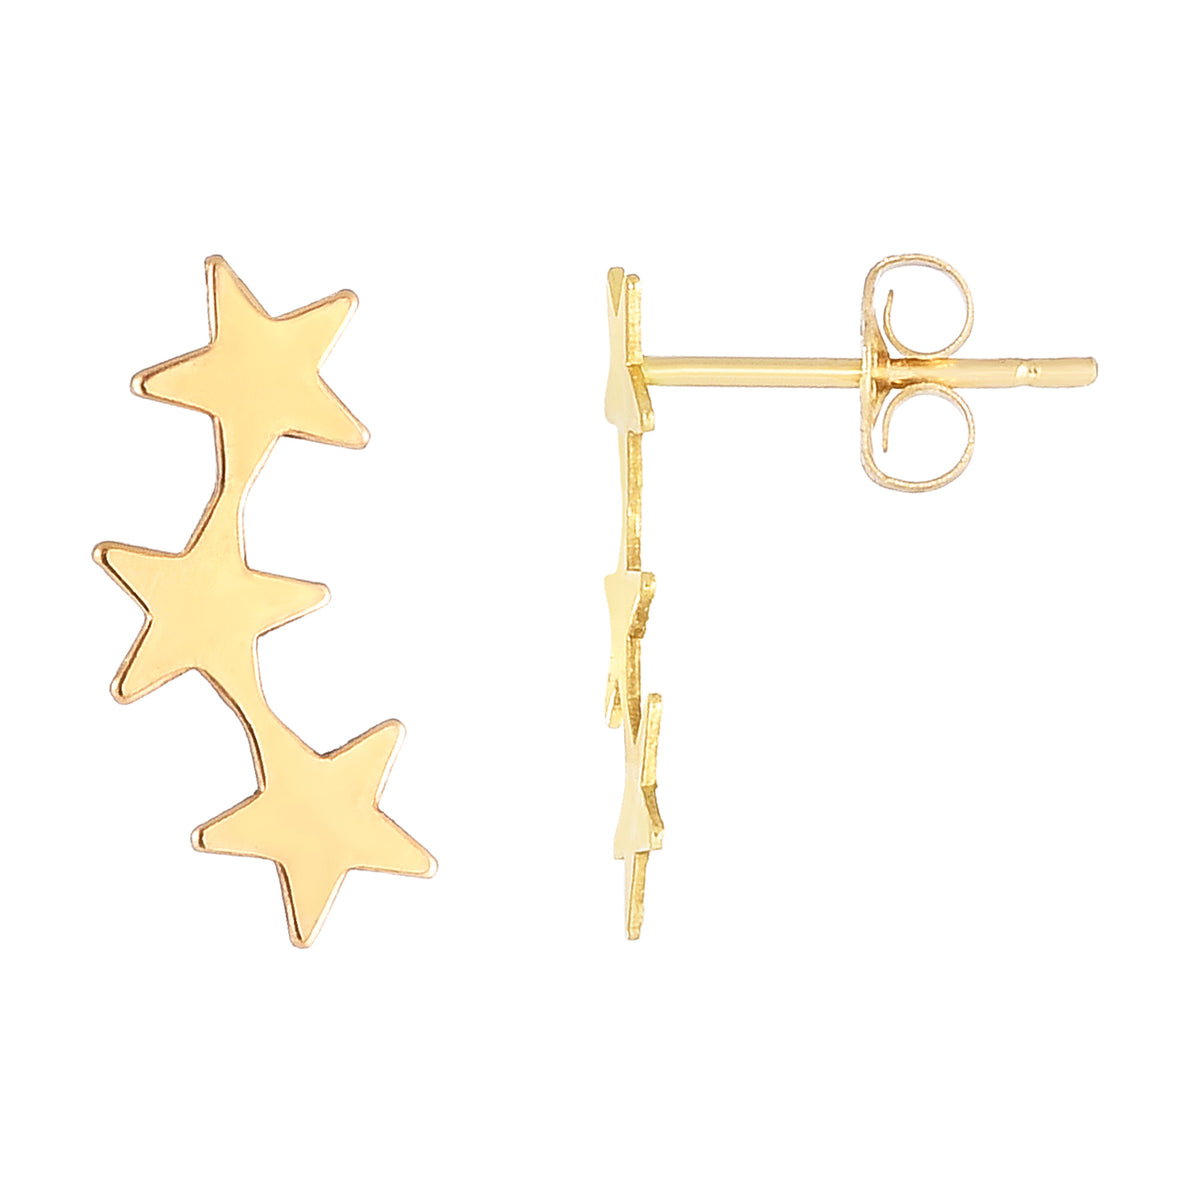 14K Yellow Gold 3 Star Climber Stud Earrings fine designer jewelry for men and women